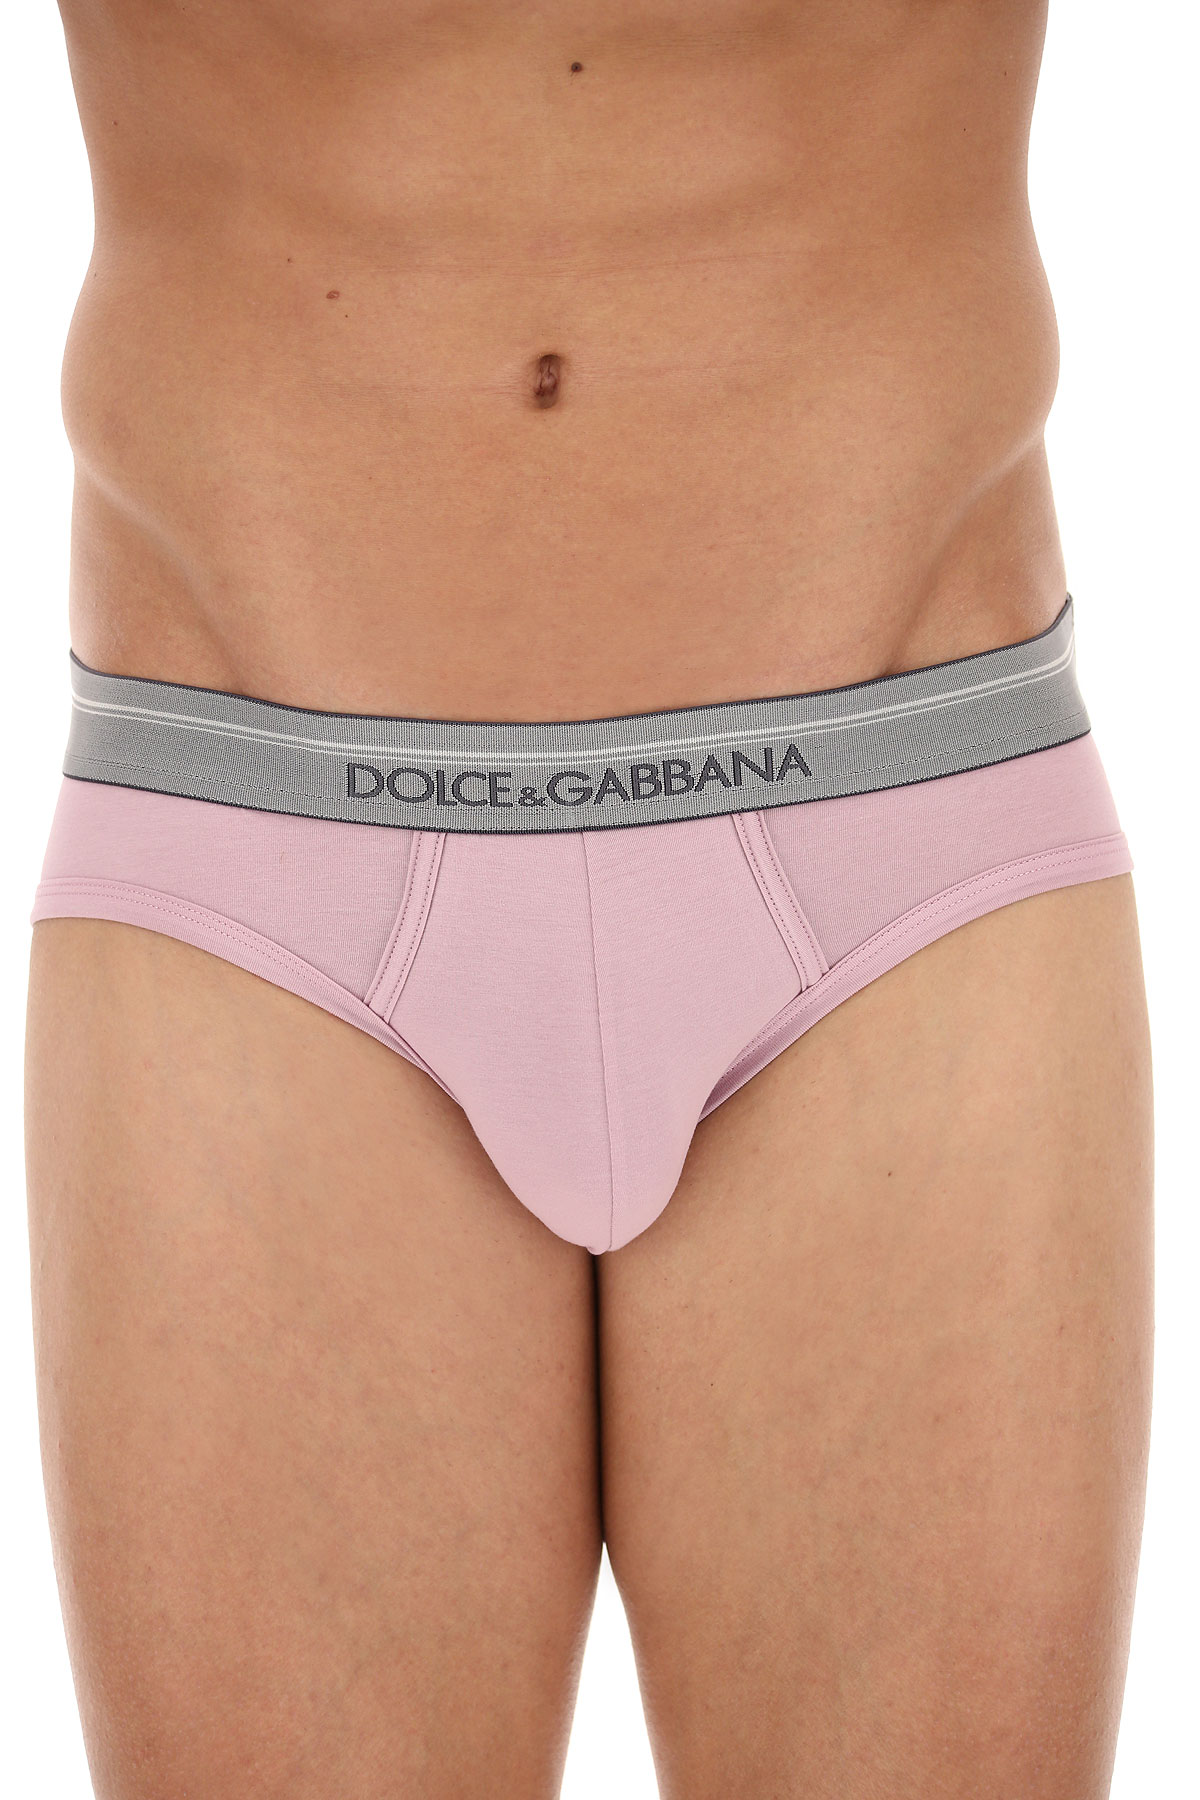 Dolce & Gabbana Slip Homme, Rose Lilas Clair, Coton, 2017, L S XL